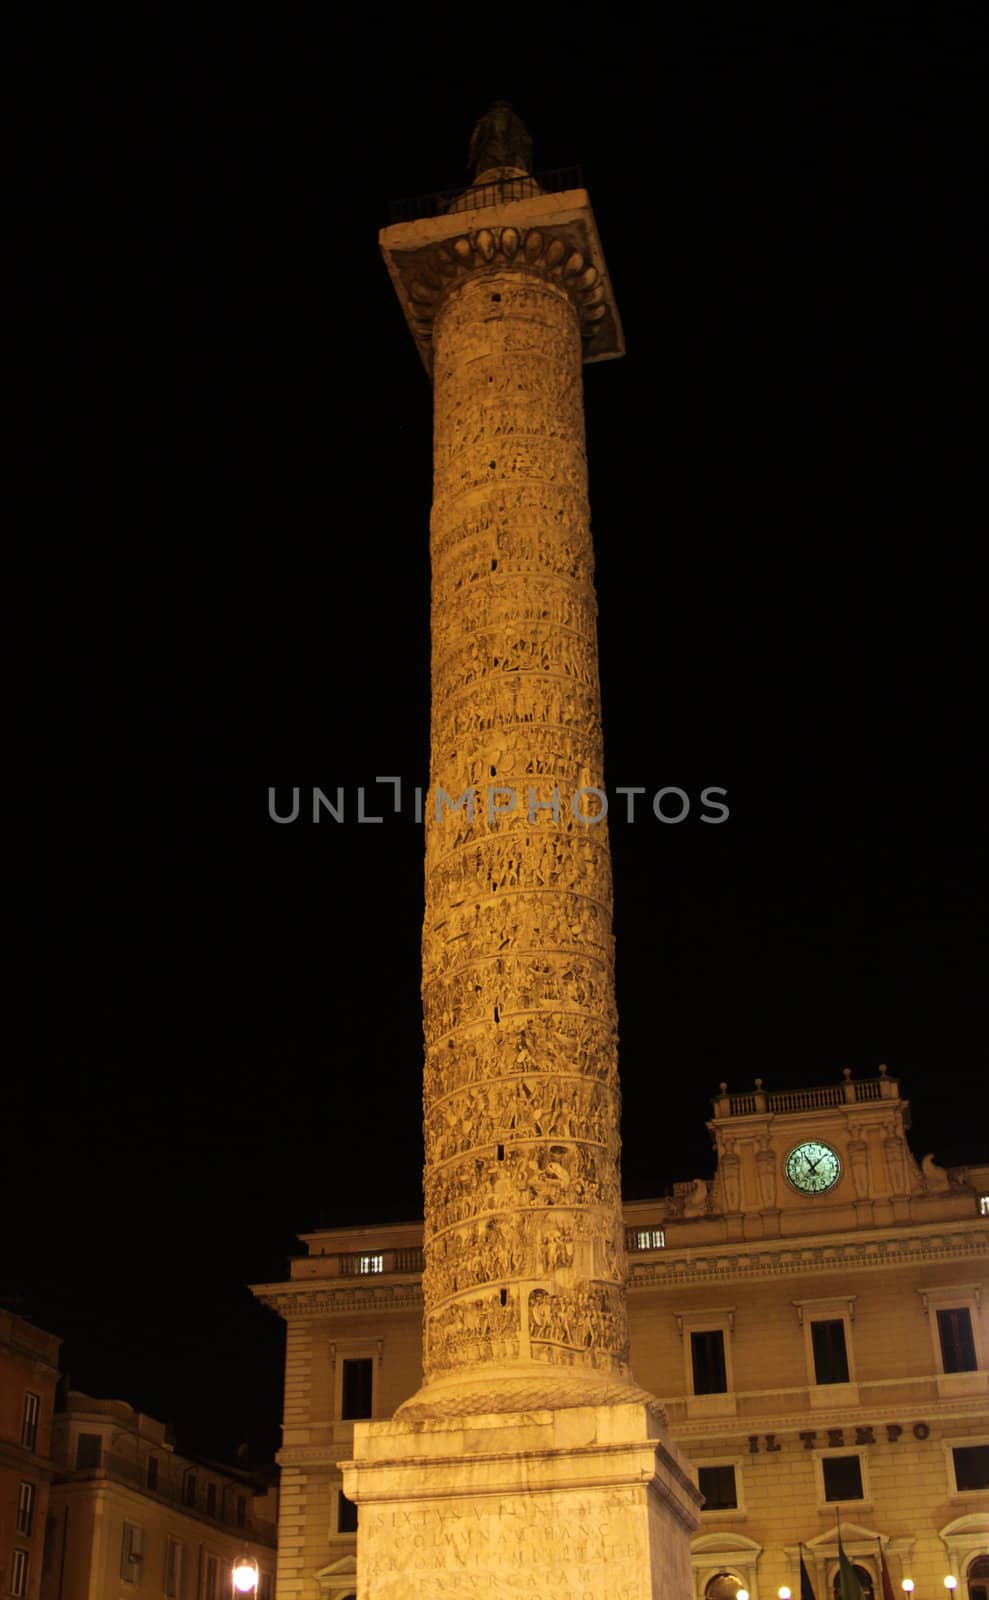 The Column of Marcus Aurelius, located in Piazza Colonna, Rome, Italy. Shot at night.
